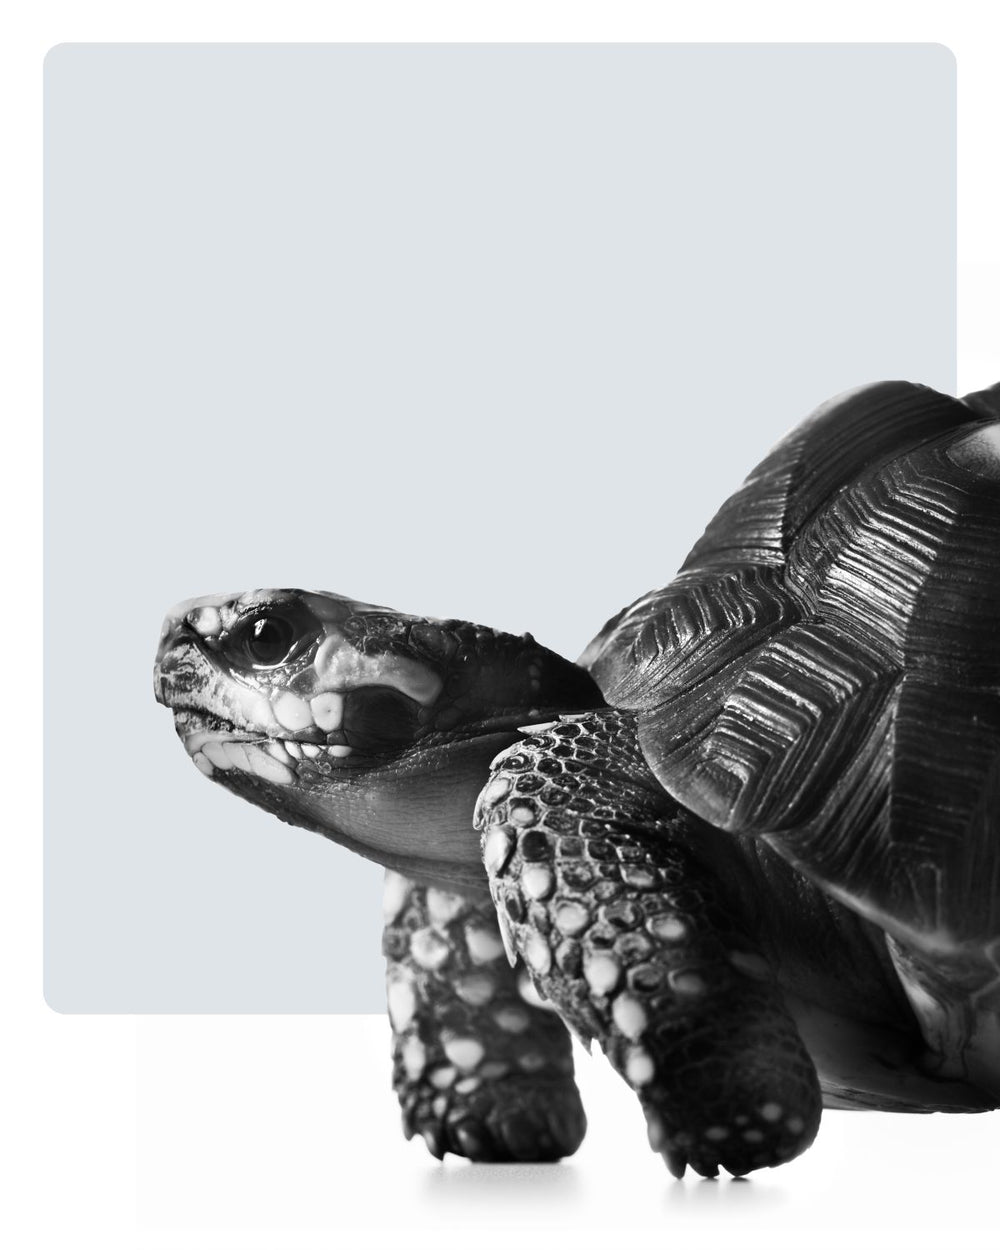 Turtle Side Profile